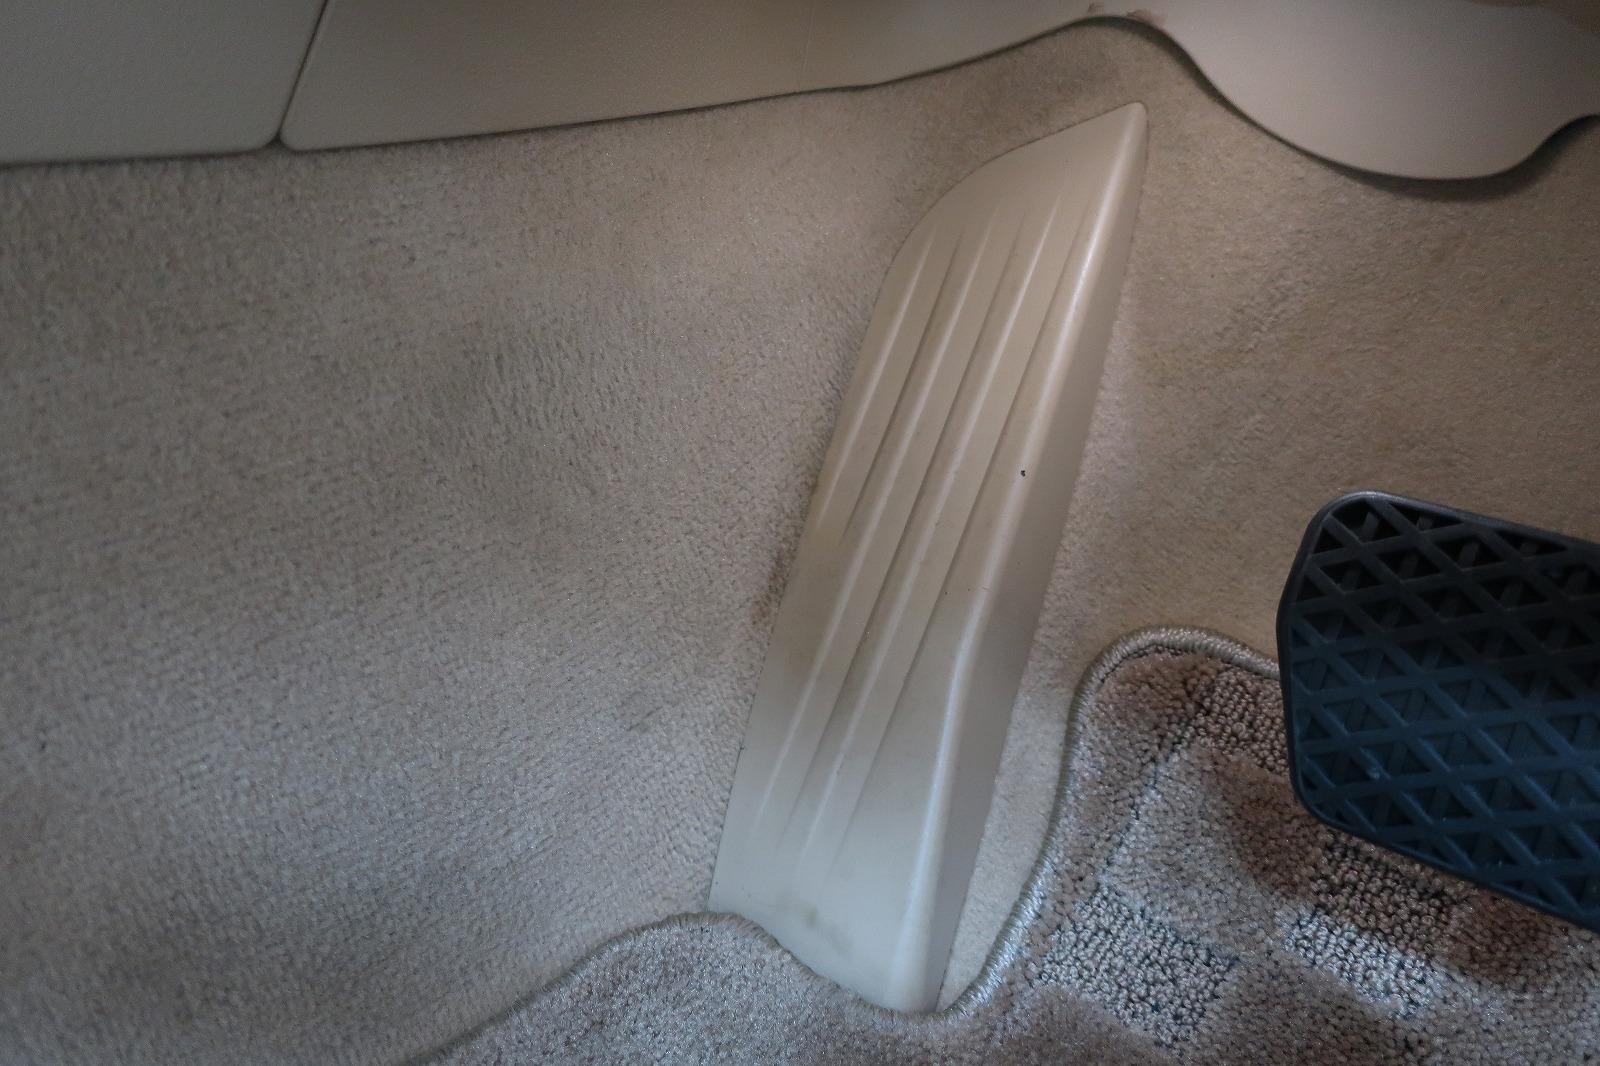 Bmw 3d リフレッシュプラン 車内クリーニング編 カービューティープロ ブルーボトル ガラスコーティング 東京